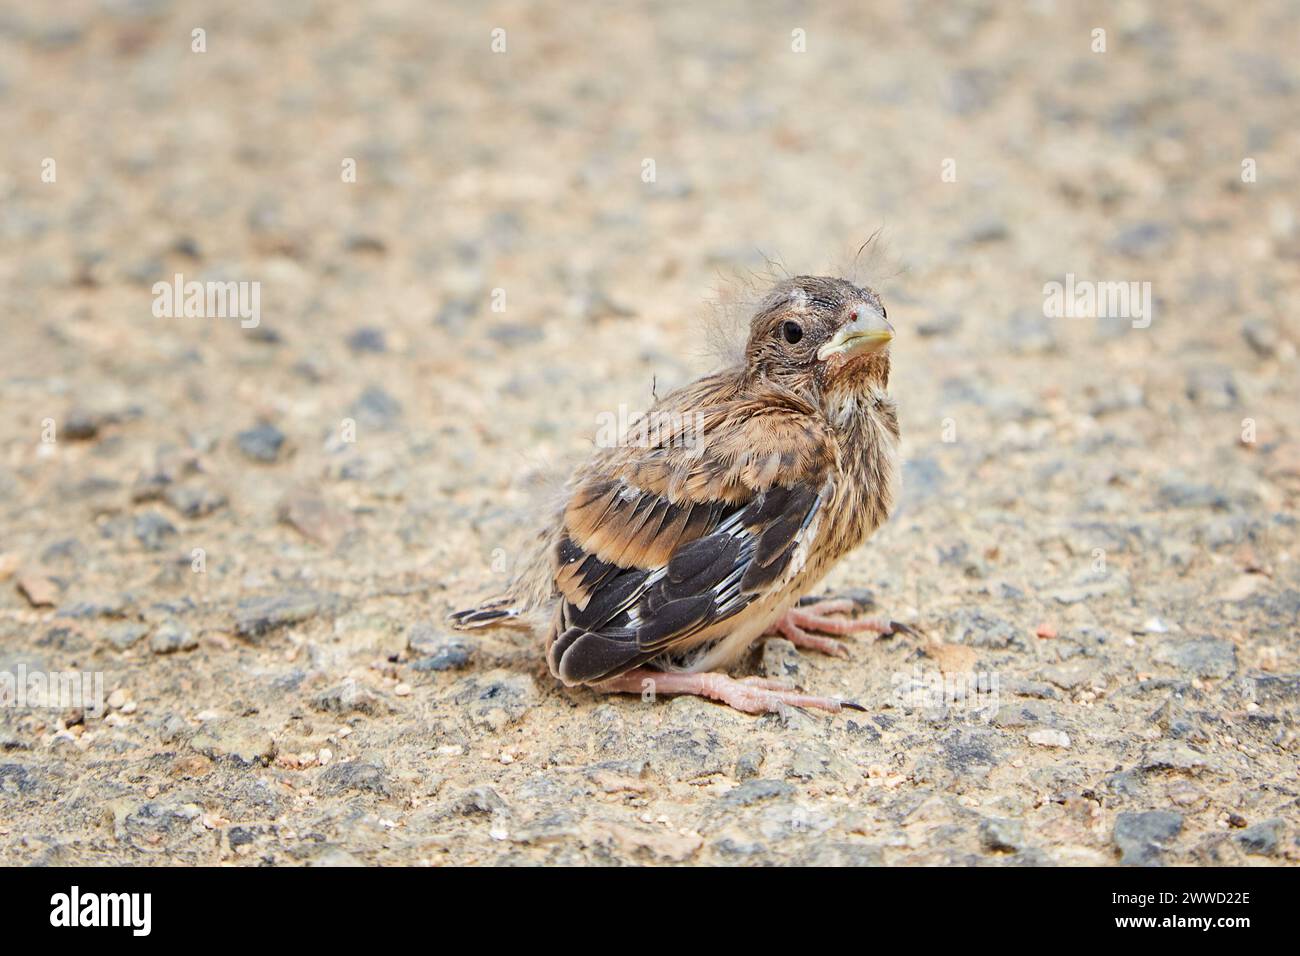 Small Lost Bird on the Ground Stock Photo